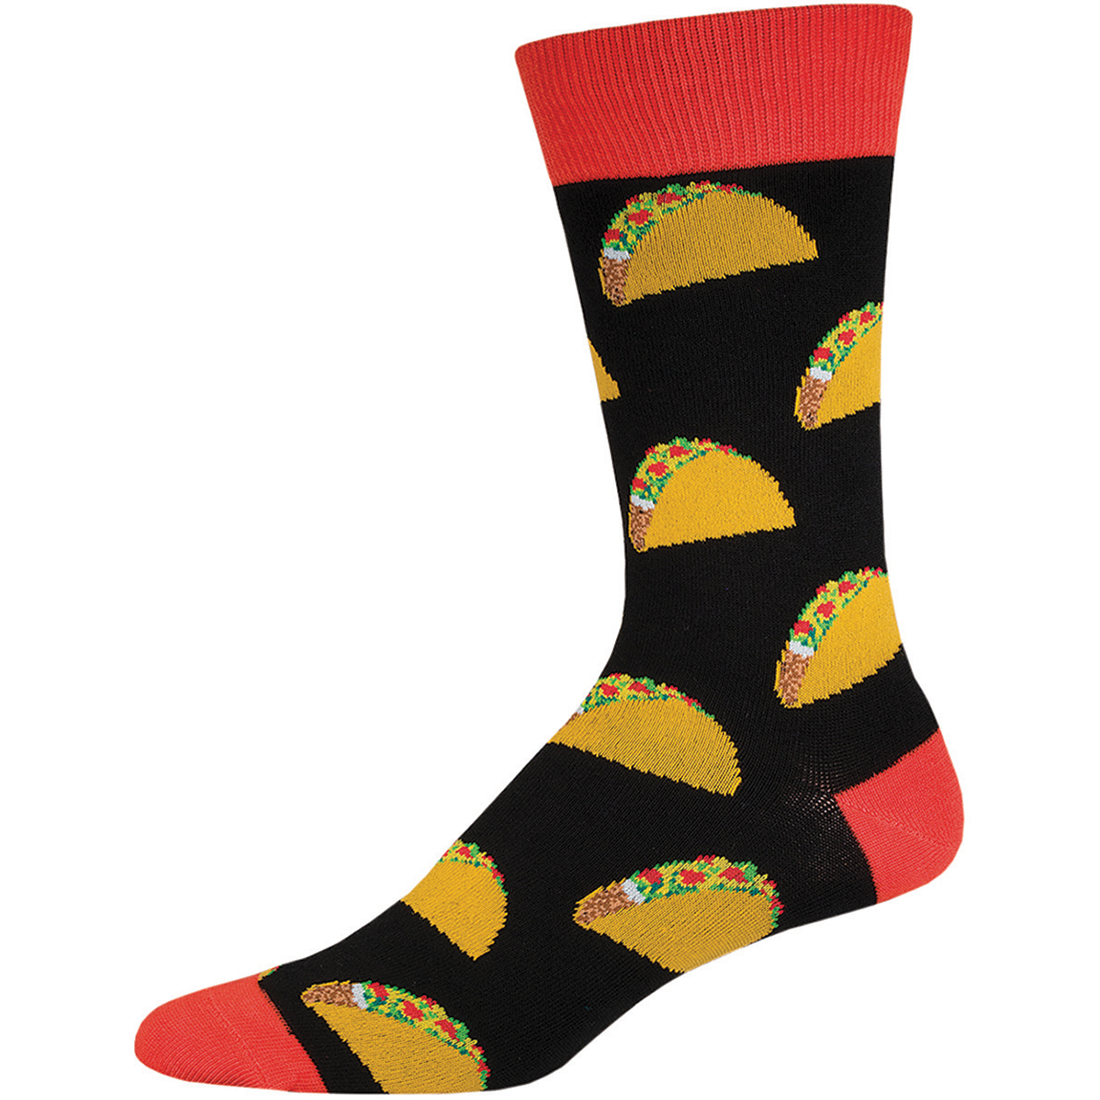 Black Taco Novelty Socks - Men's